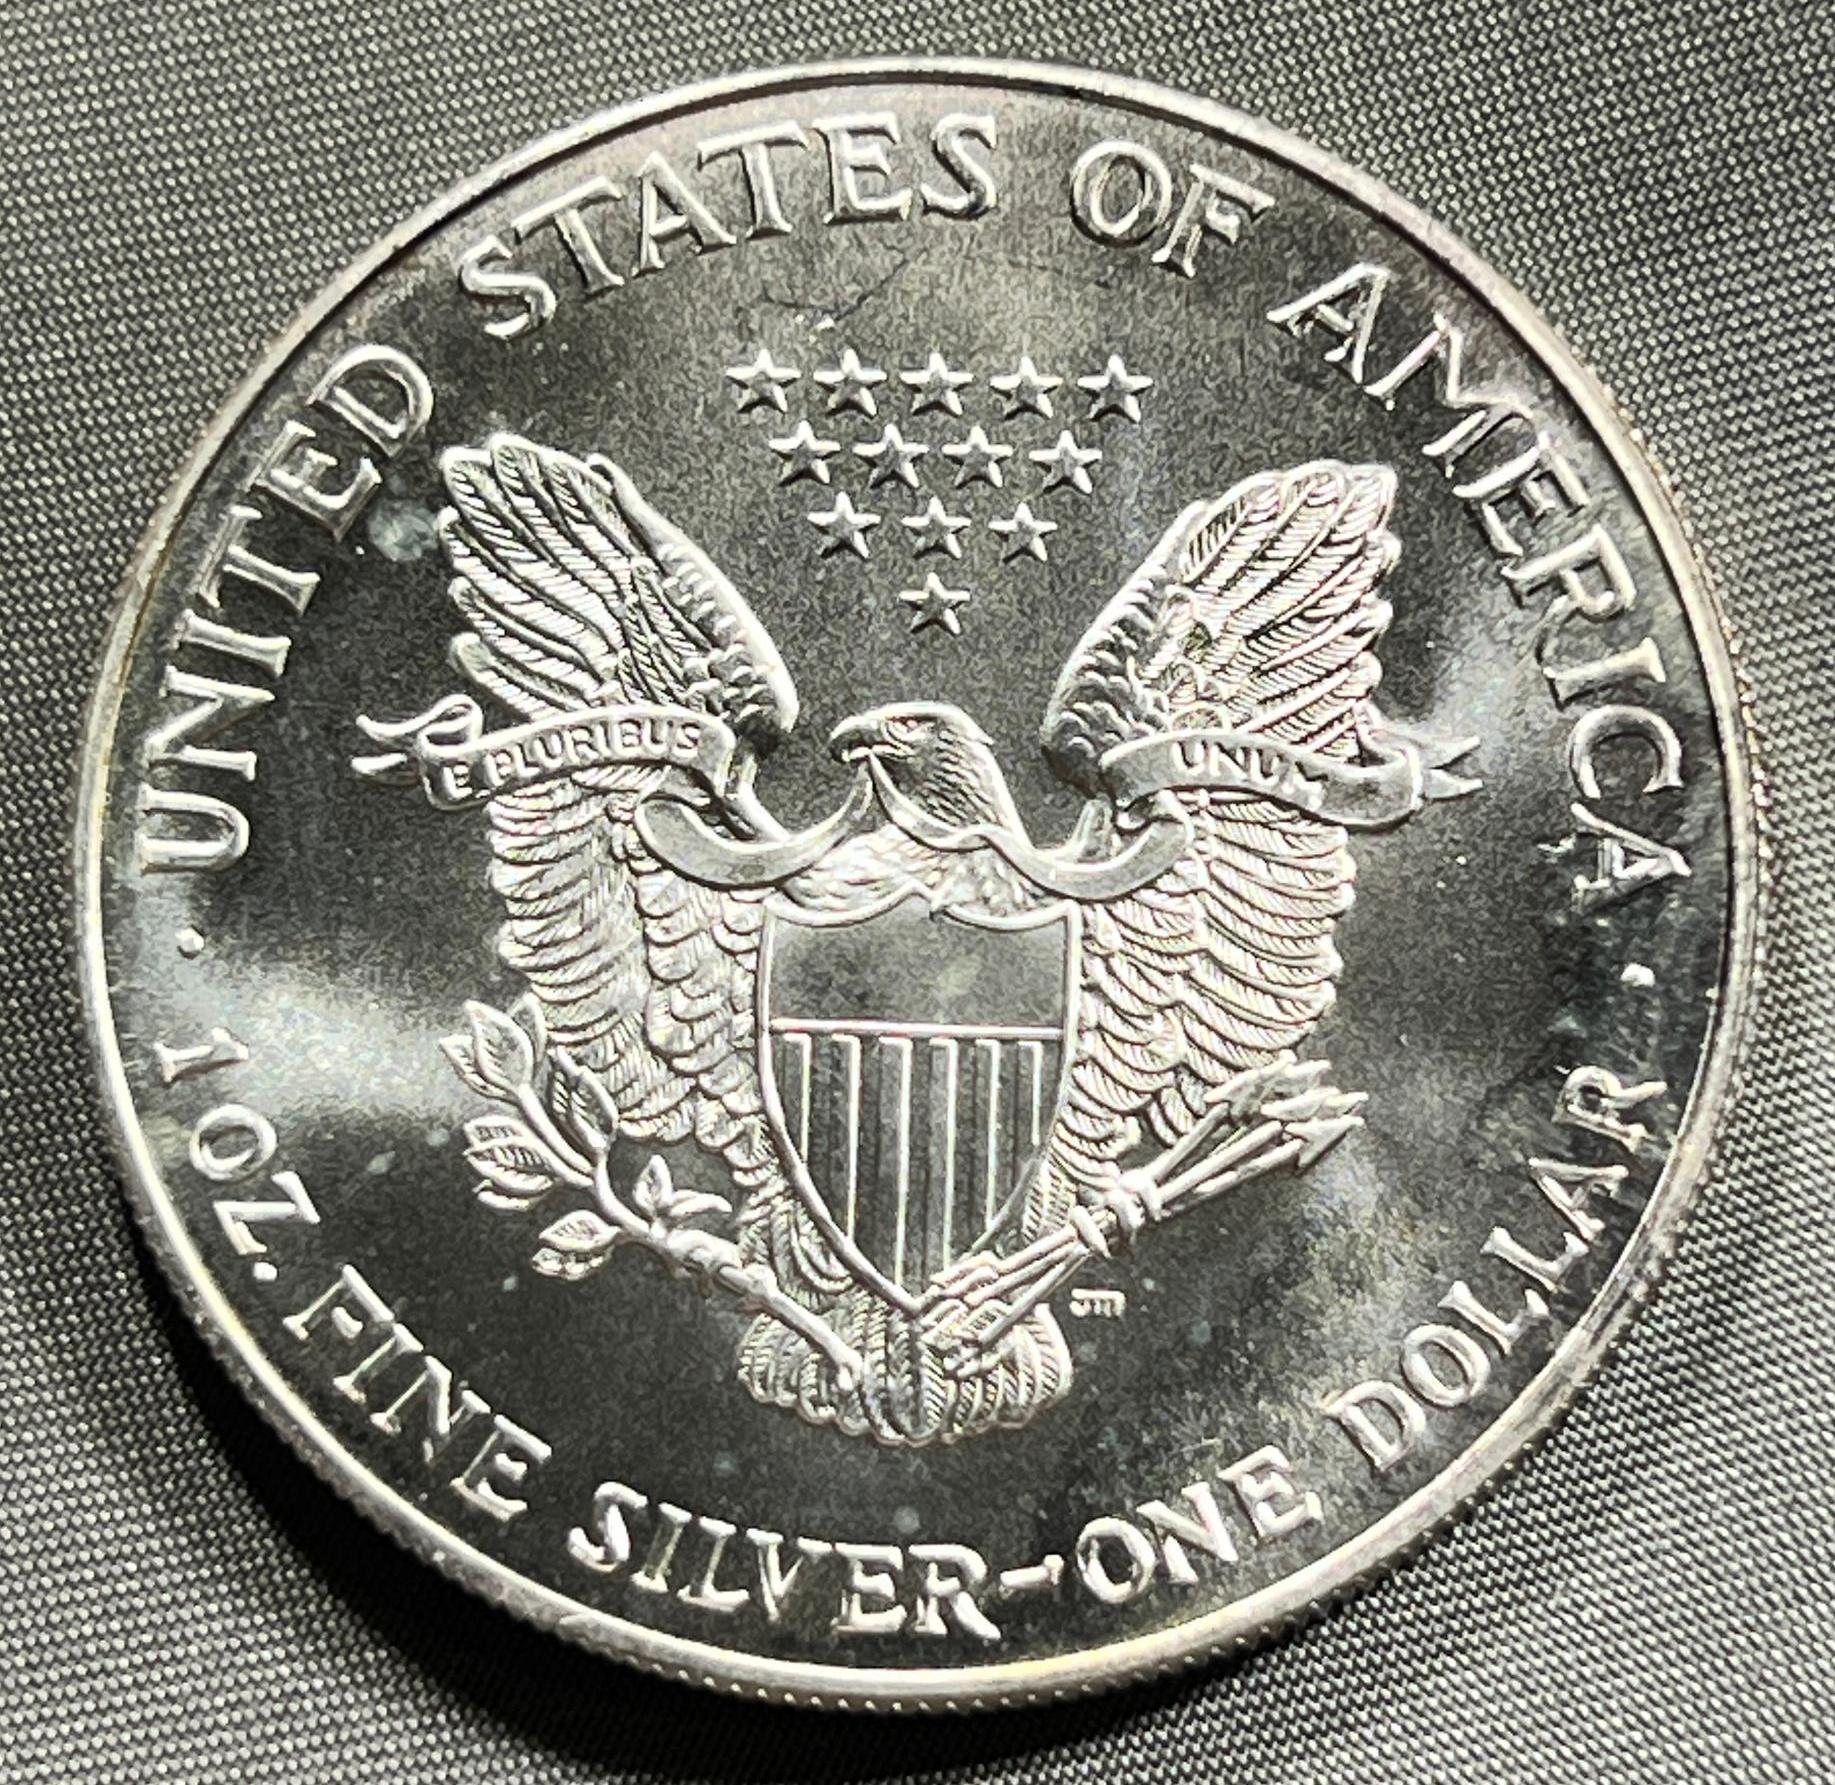 1994 US Silver Eagle Dollar Coin, .999 Fine Silver